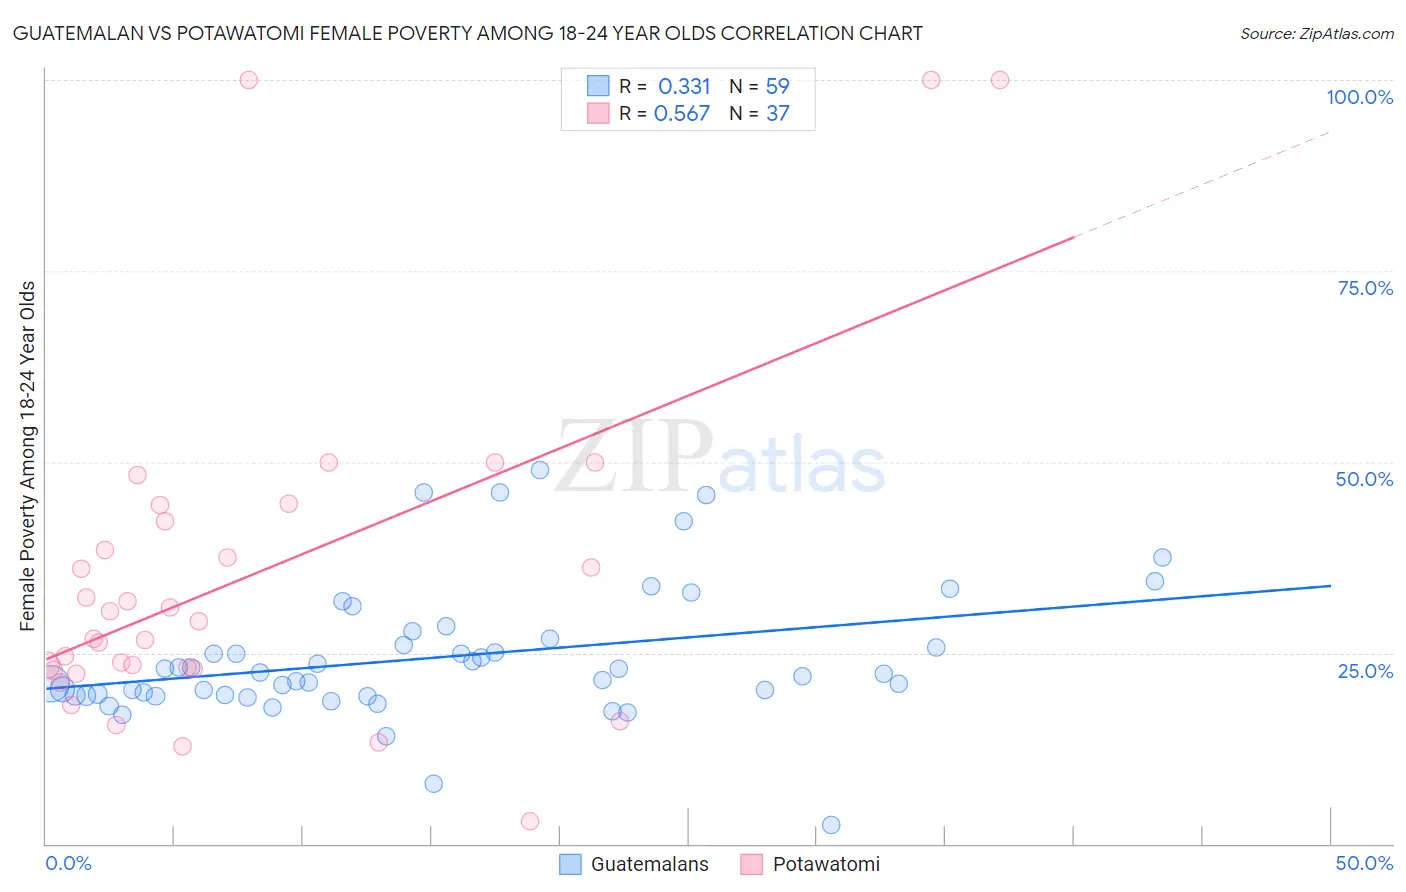 Guatemalan vs Potawatomi Female Poverty Among 18-24 Year Olds